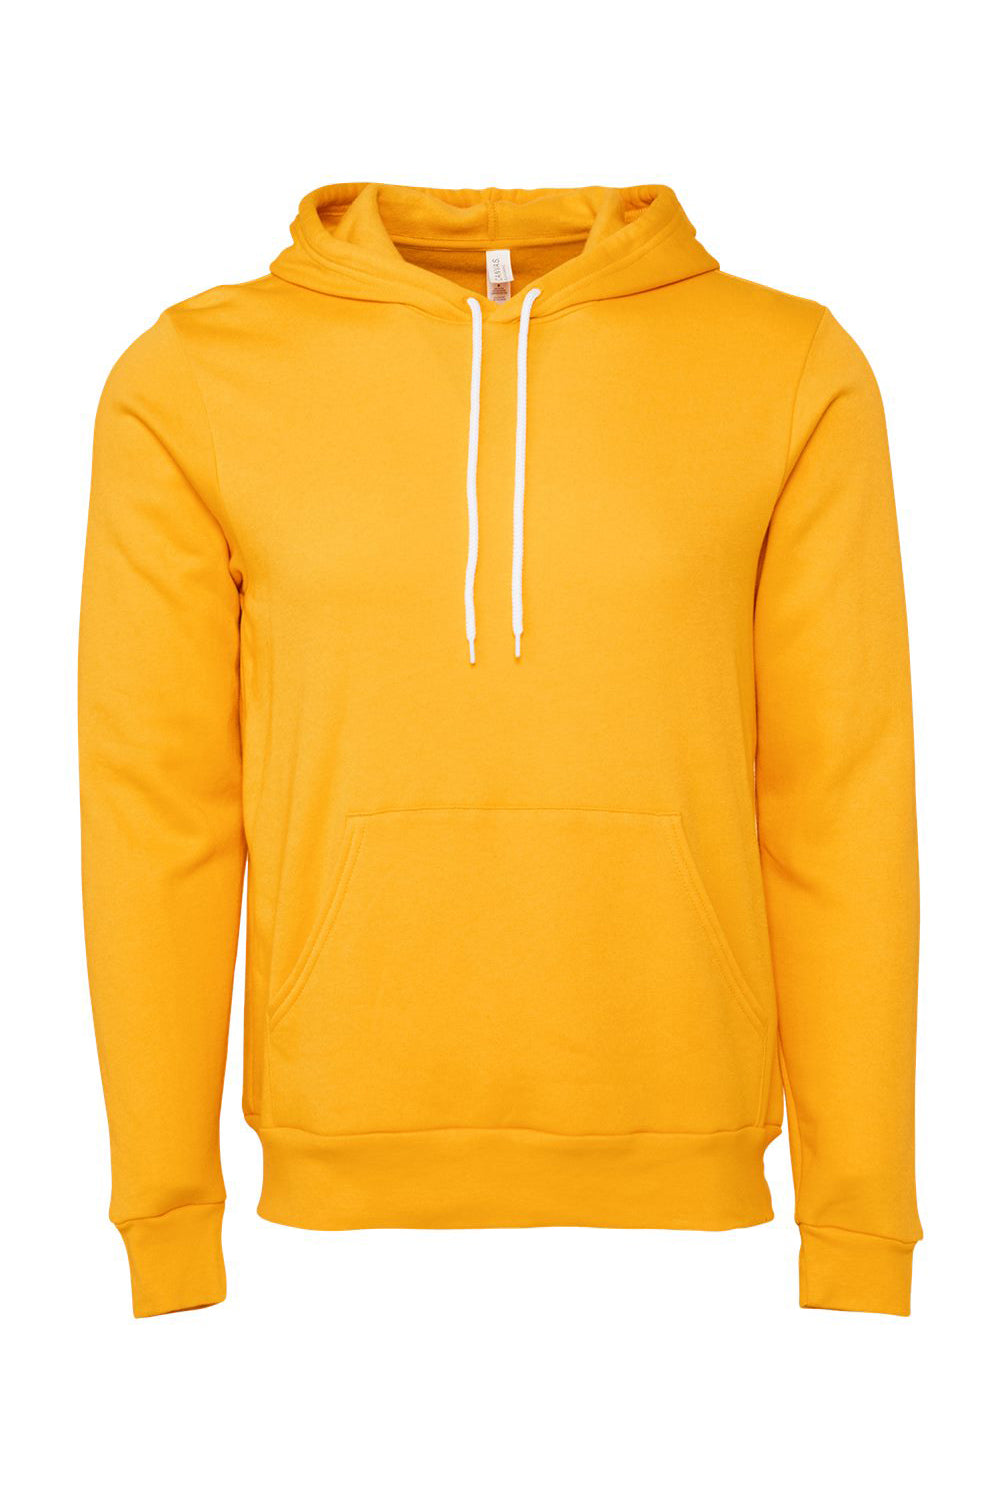 Bella + Canvas BC3719/3719 Mens Sponge Fleece Hooded Sweatshirt Hoodie Gold Flat Front